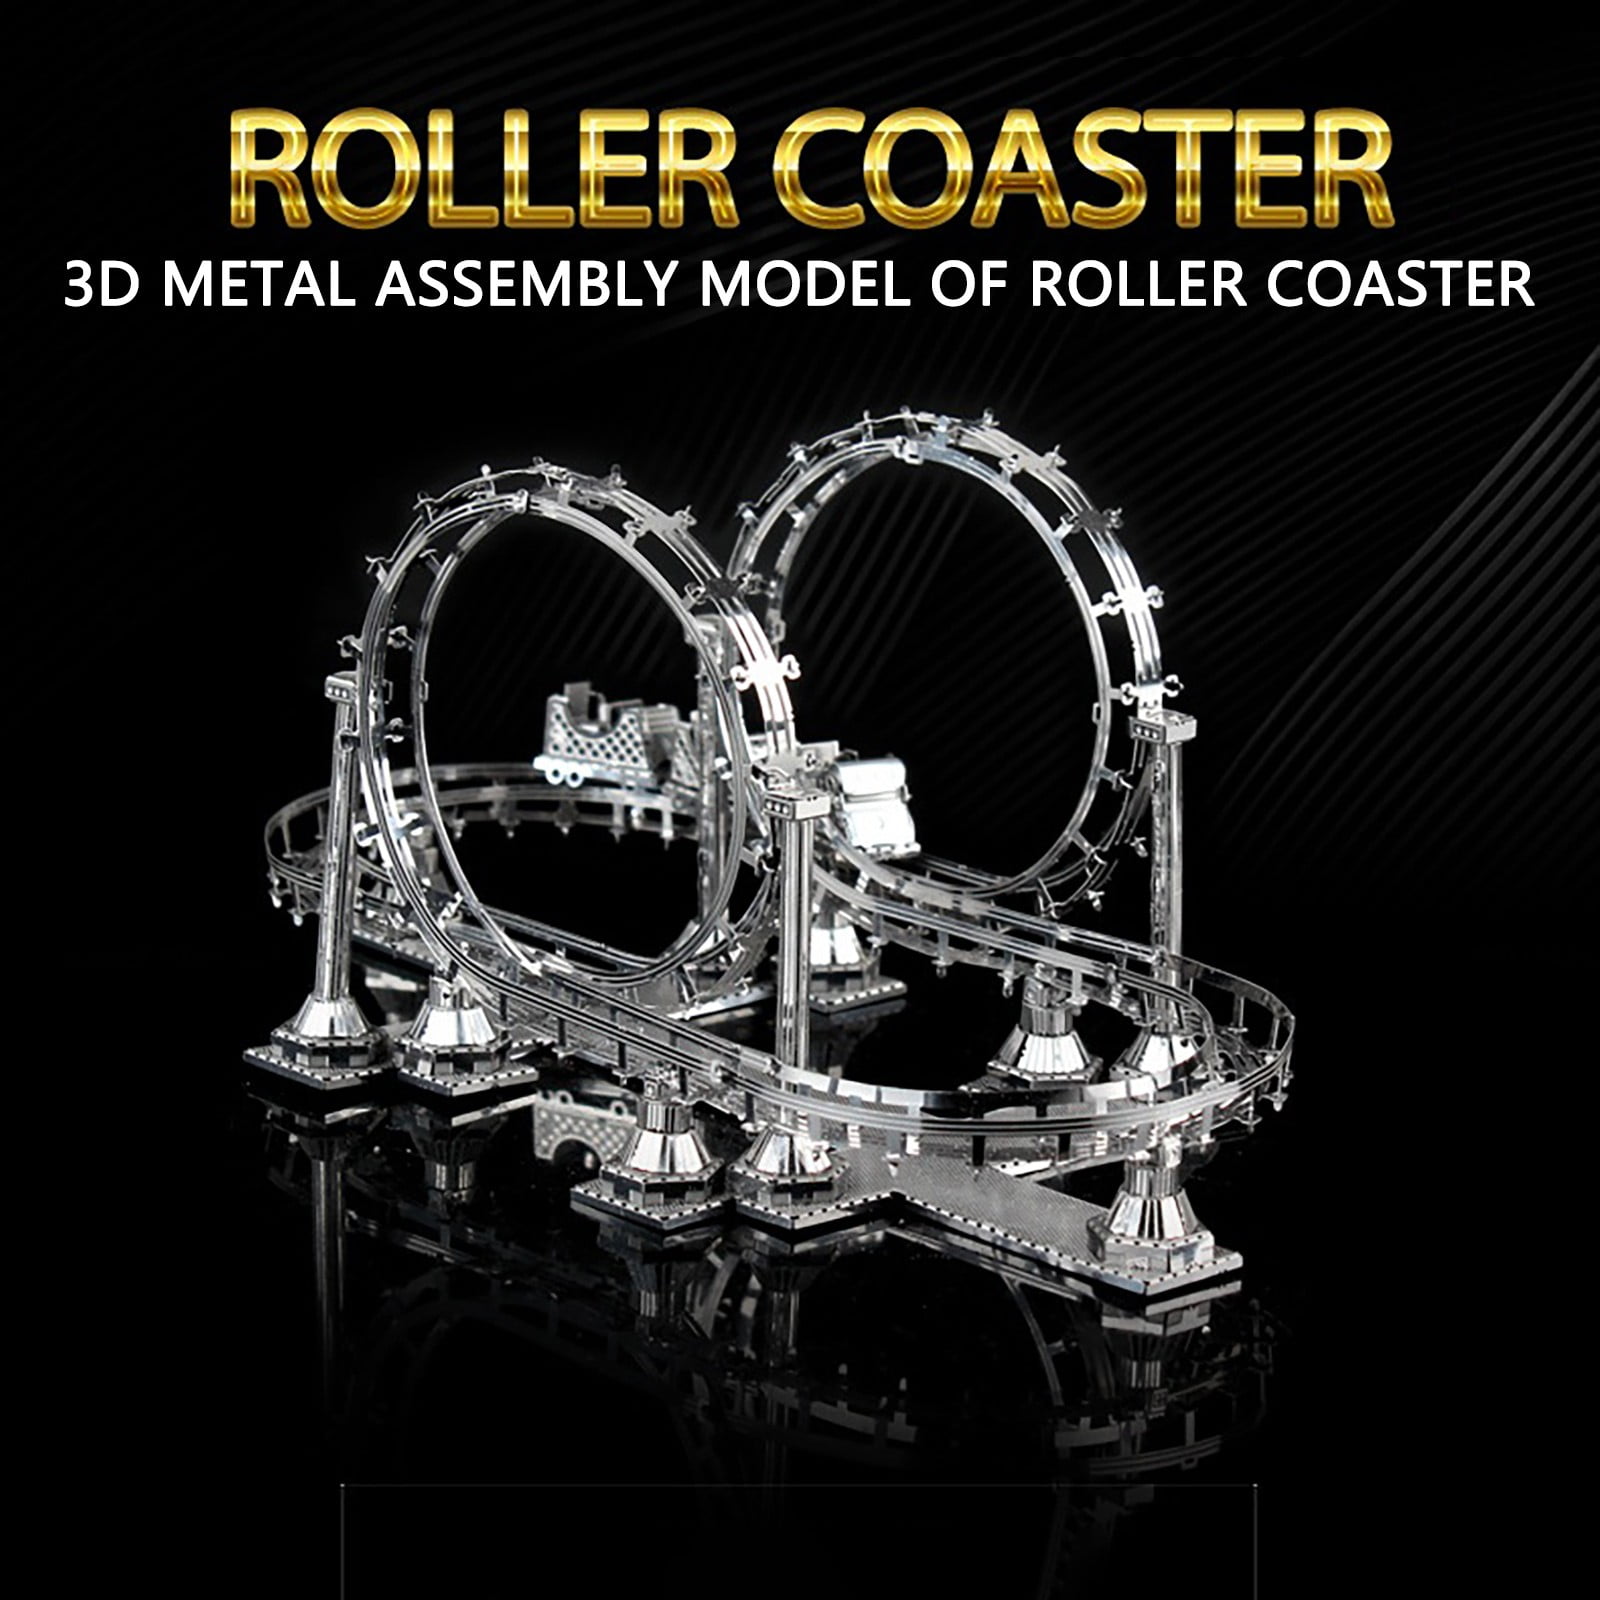 ROLLER COASTER NANYUAN 3D Metal Assembly Model Amusement Facilities Puzzle toys 